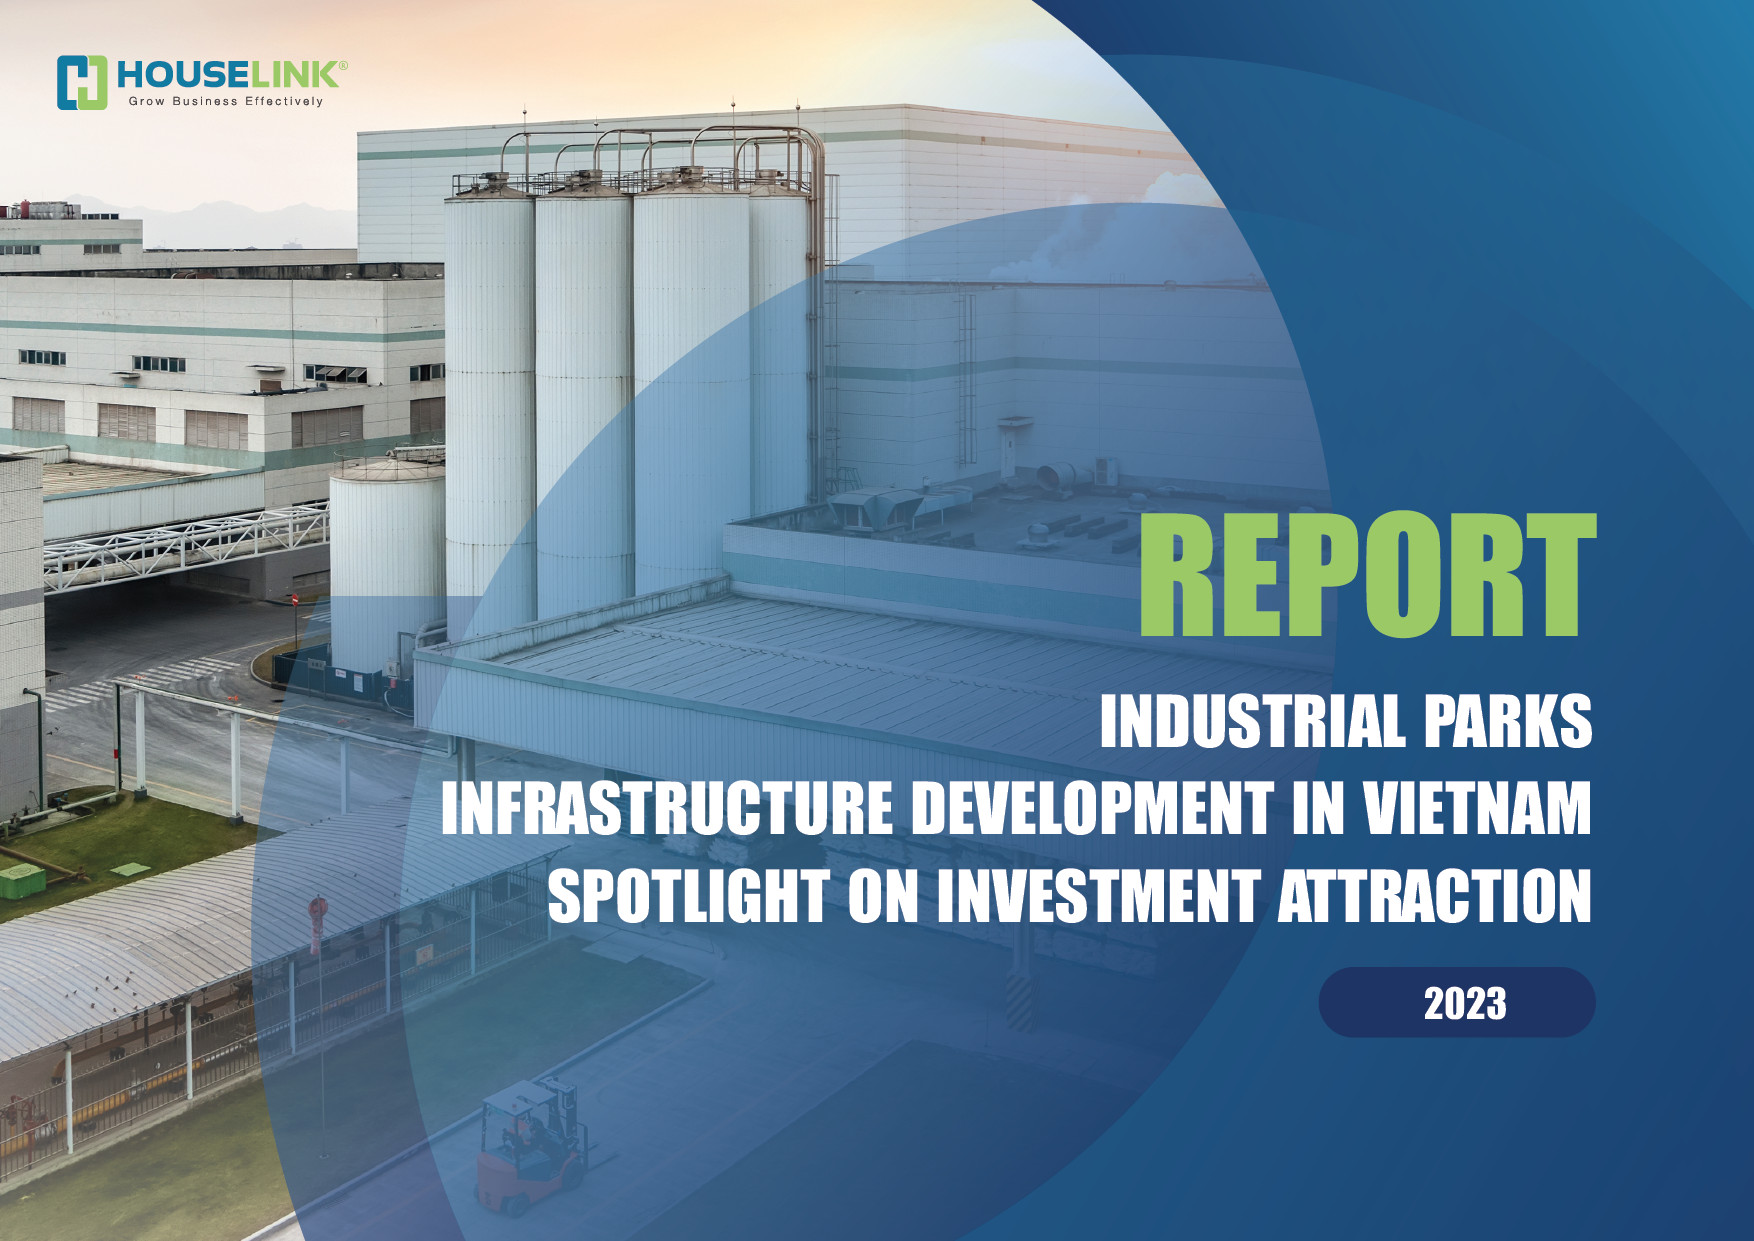 Industrial Parks - Infrastructure Development in Vietnam - Spotlight on Investment Attraction in 2023